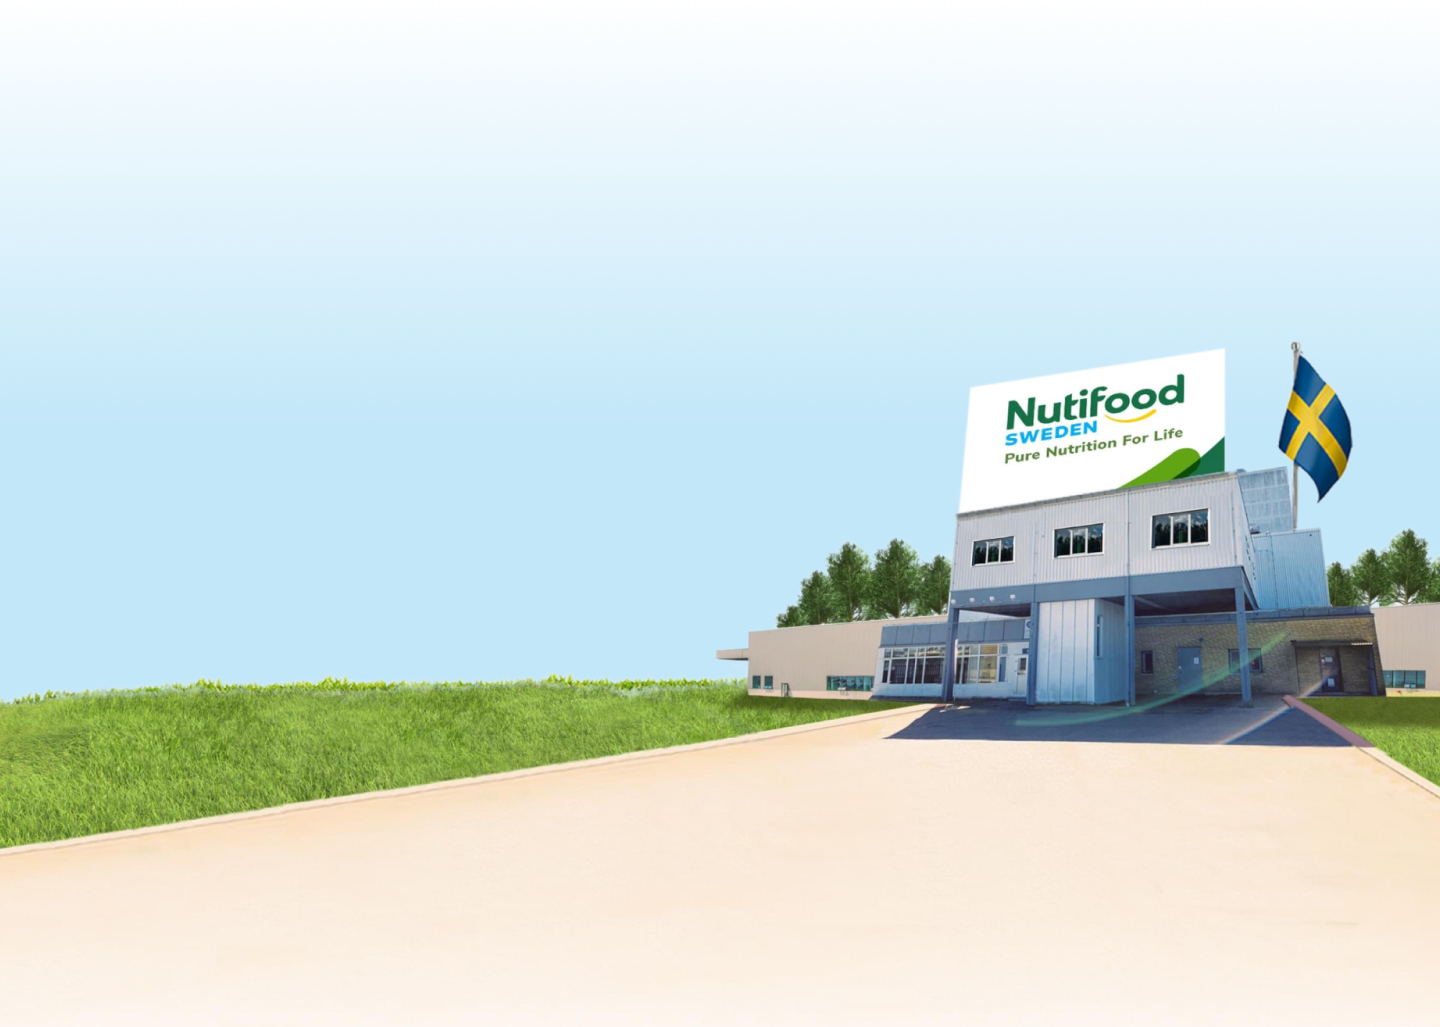 Establishing the Nutifood Nutrition Research Institute in Sweden